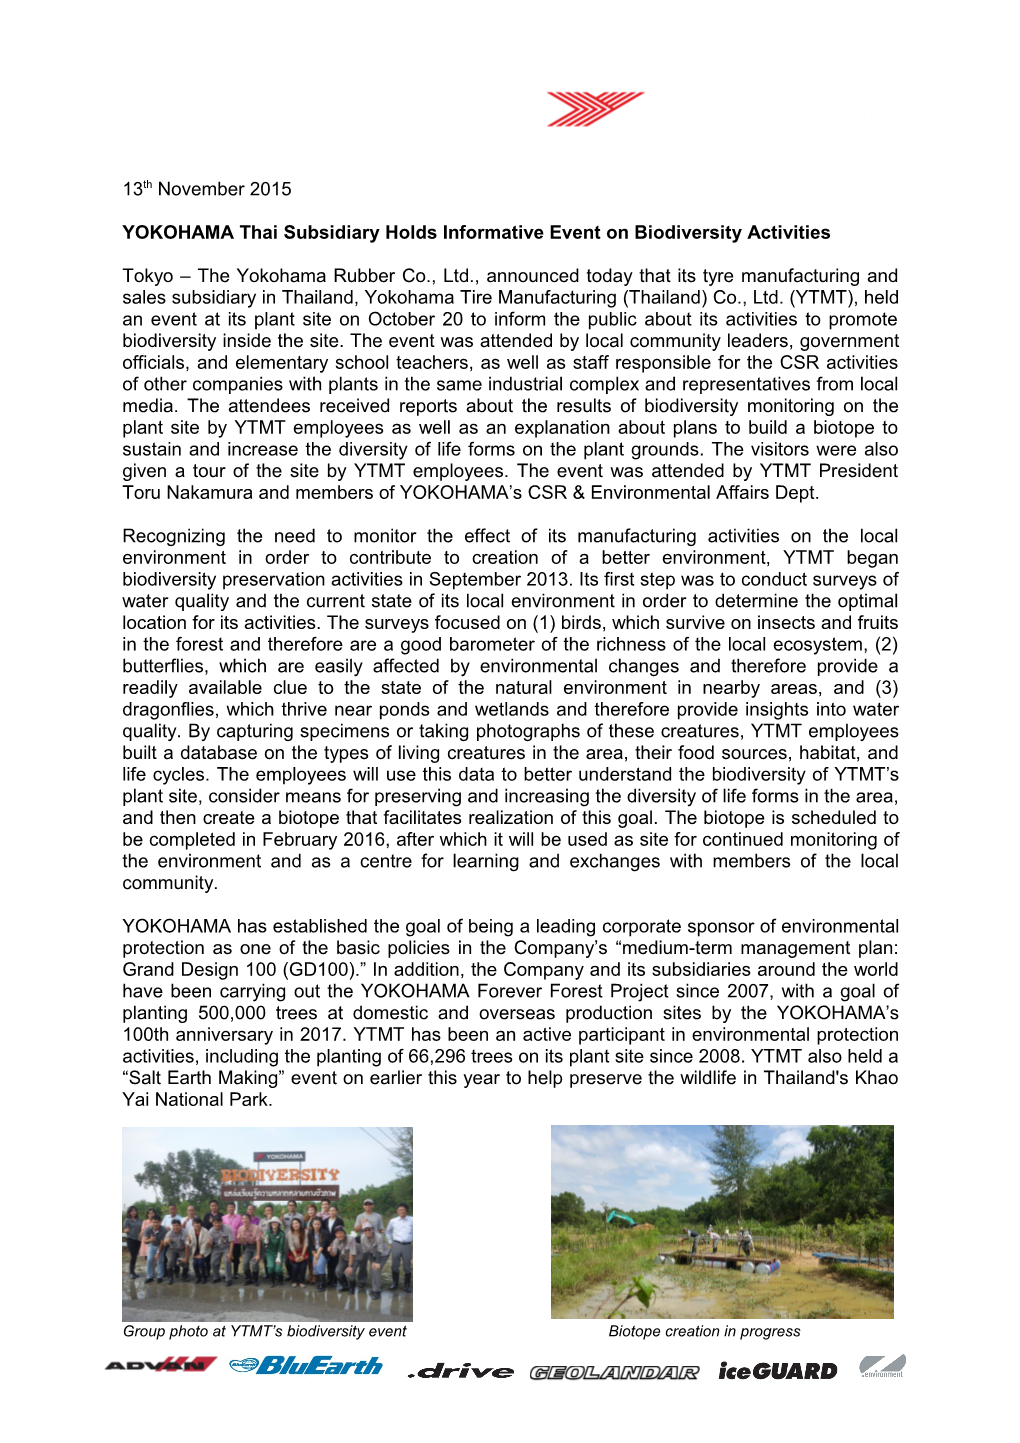 YOKOHAMA Thai Subsidiary Holds Informative Event on Biodiversity Activities